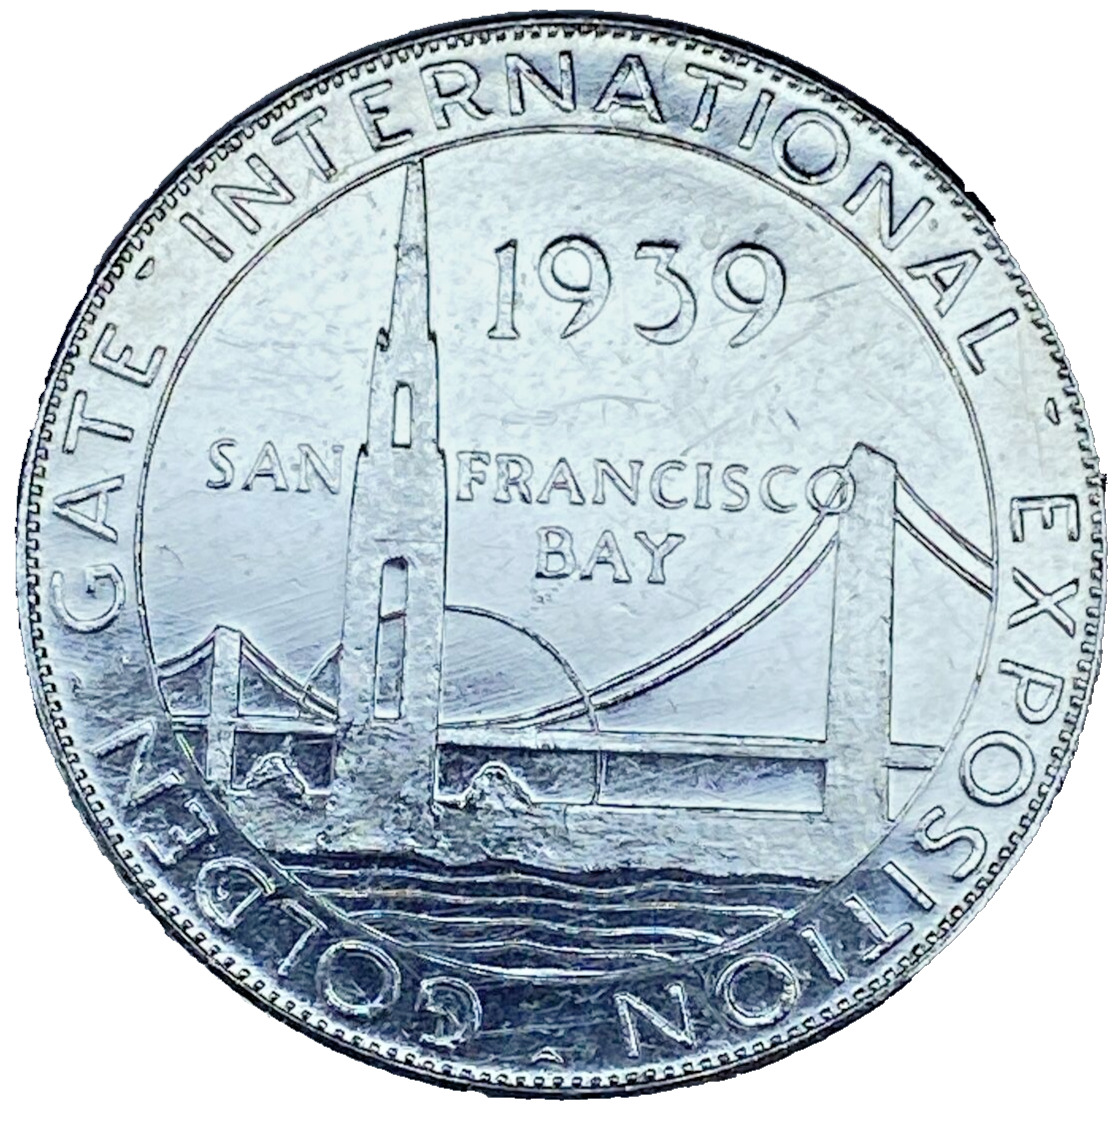 1939 Golden Gate International Exposition 32mm Token SF Bay Ca./Union Pacific RR